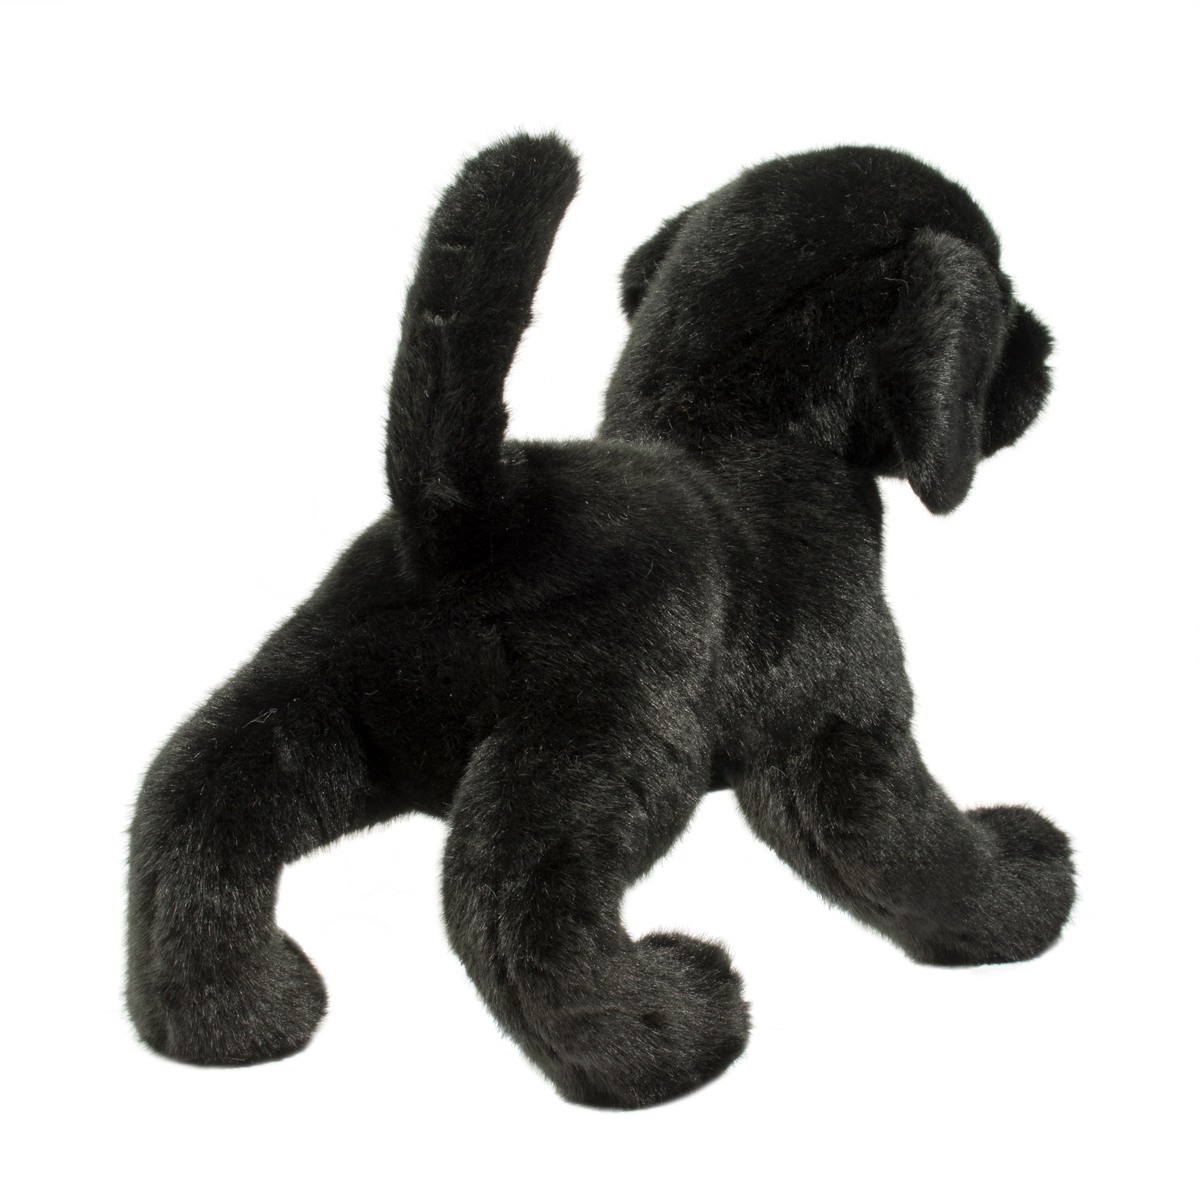 Douglas Chester Black Lab 16" Stuffed Animal Puppy Dog 1805 for sale online 